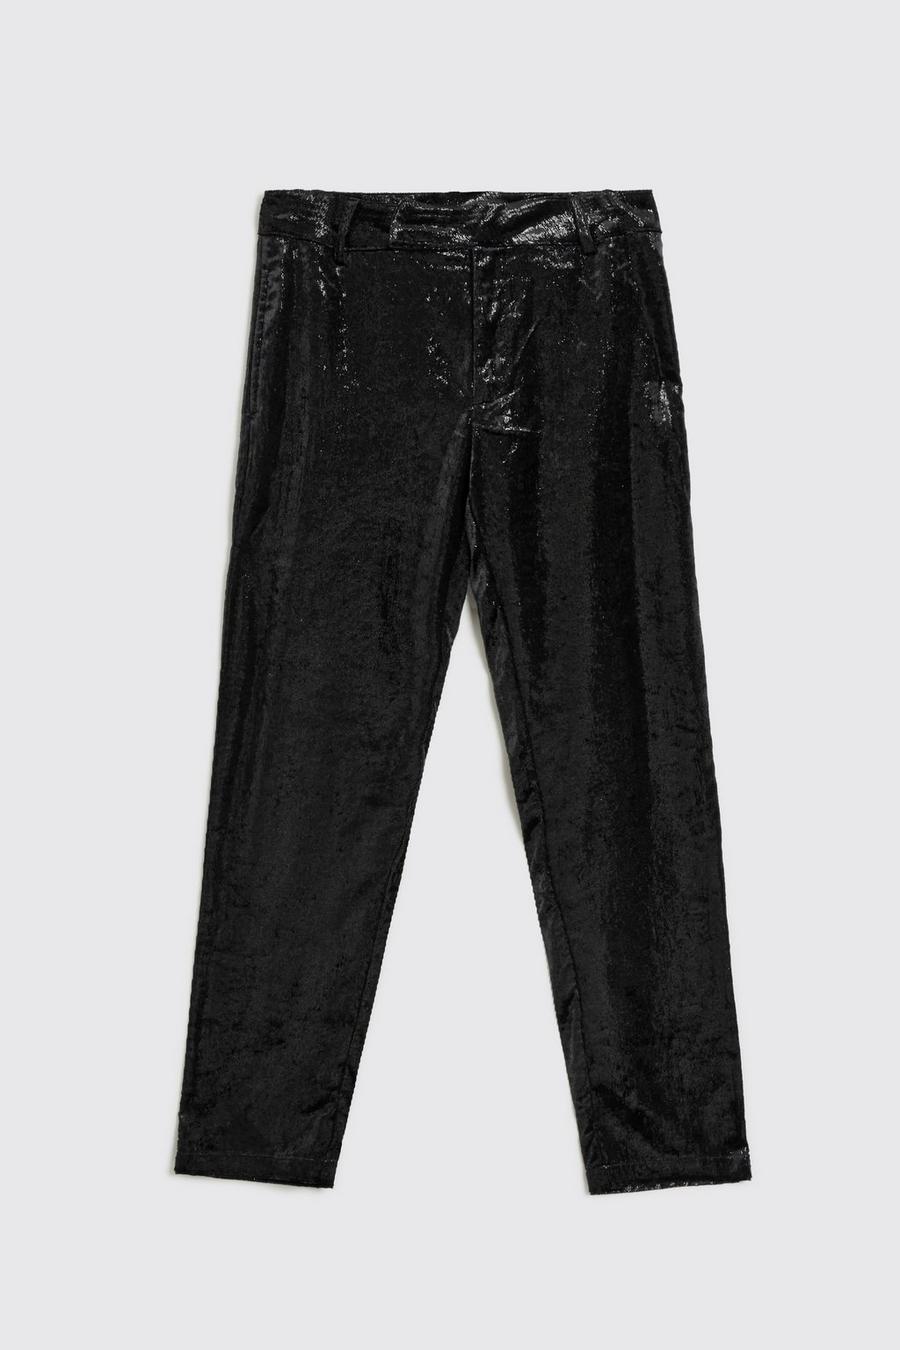 Black Metallic Shimmer Slim Trousers